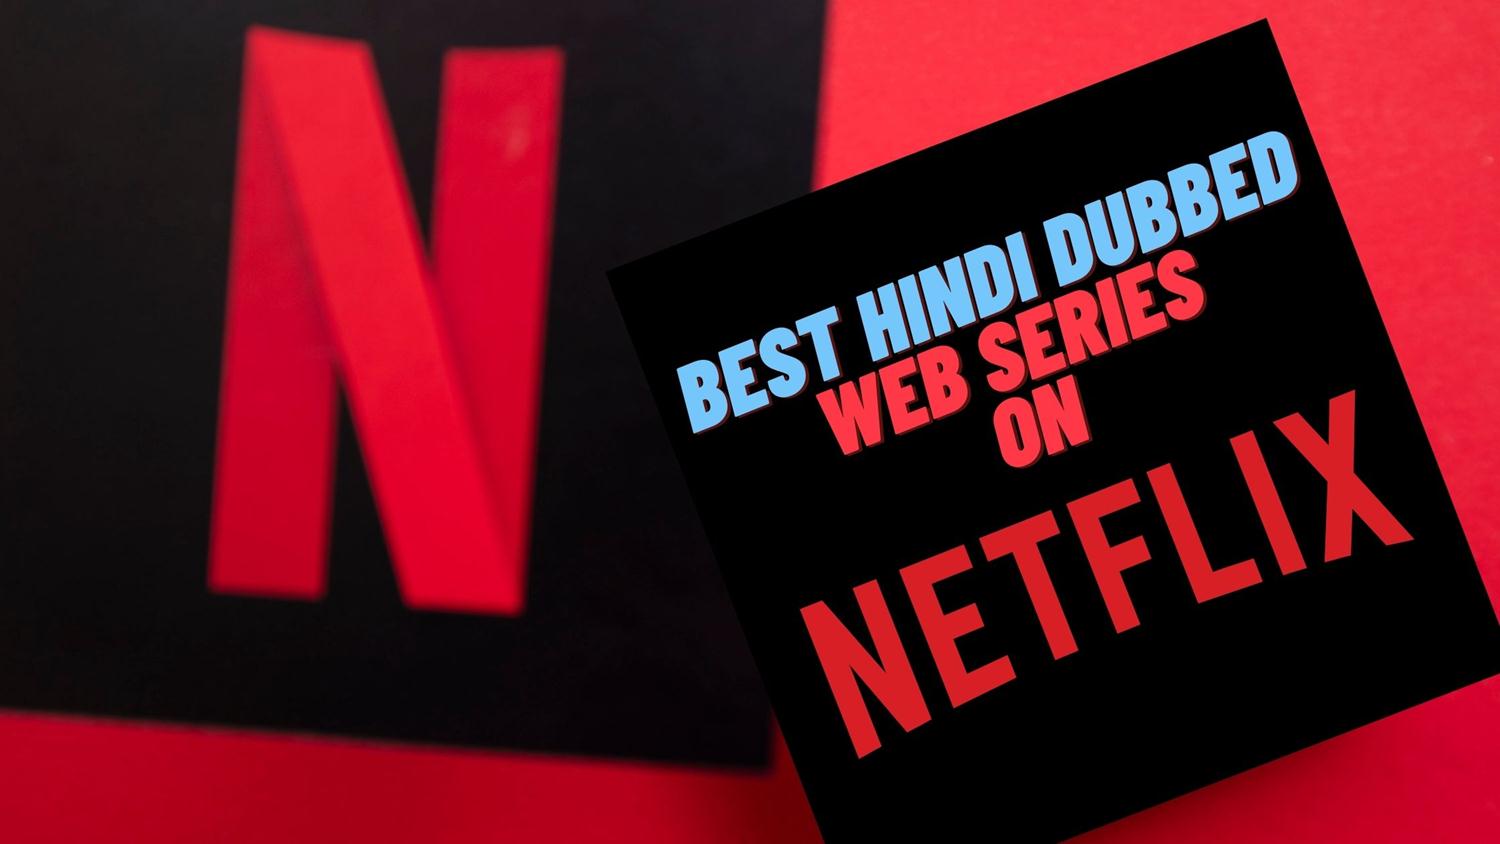 Best hindi web series on netflix